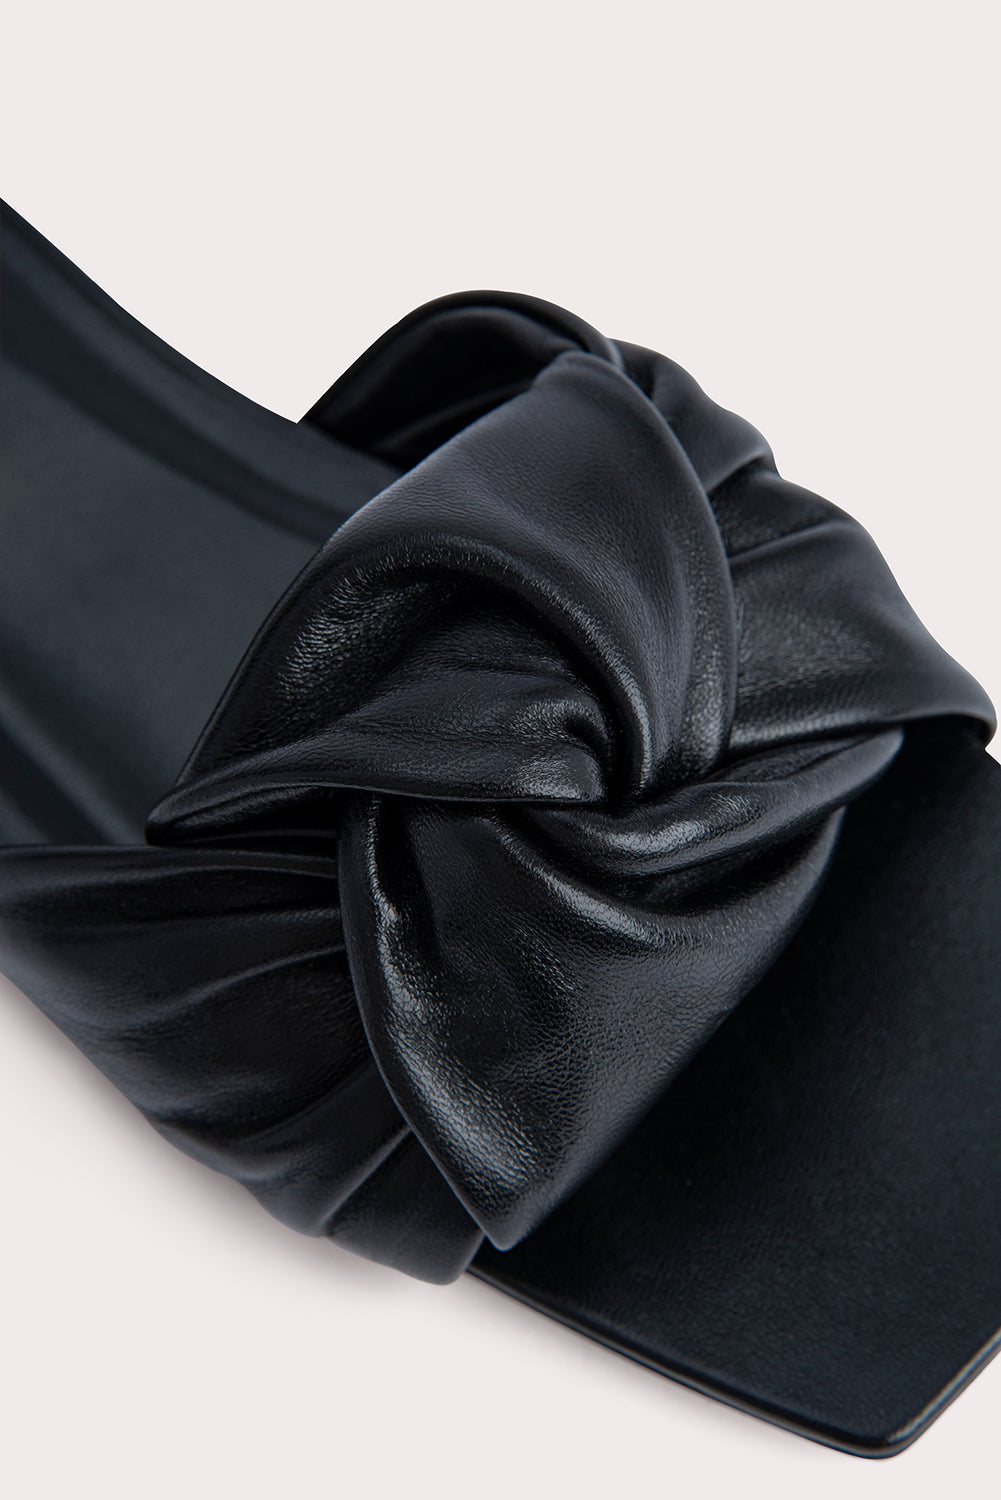 Lima Black Gloss Leather